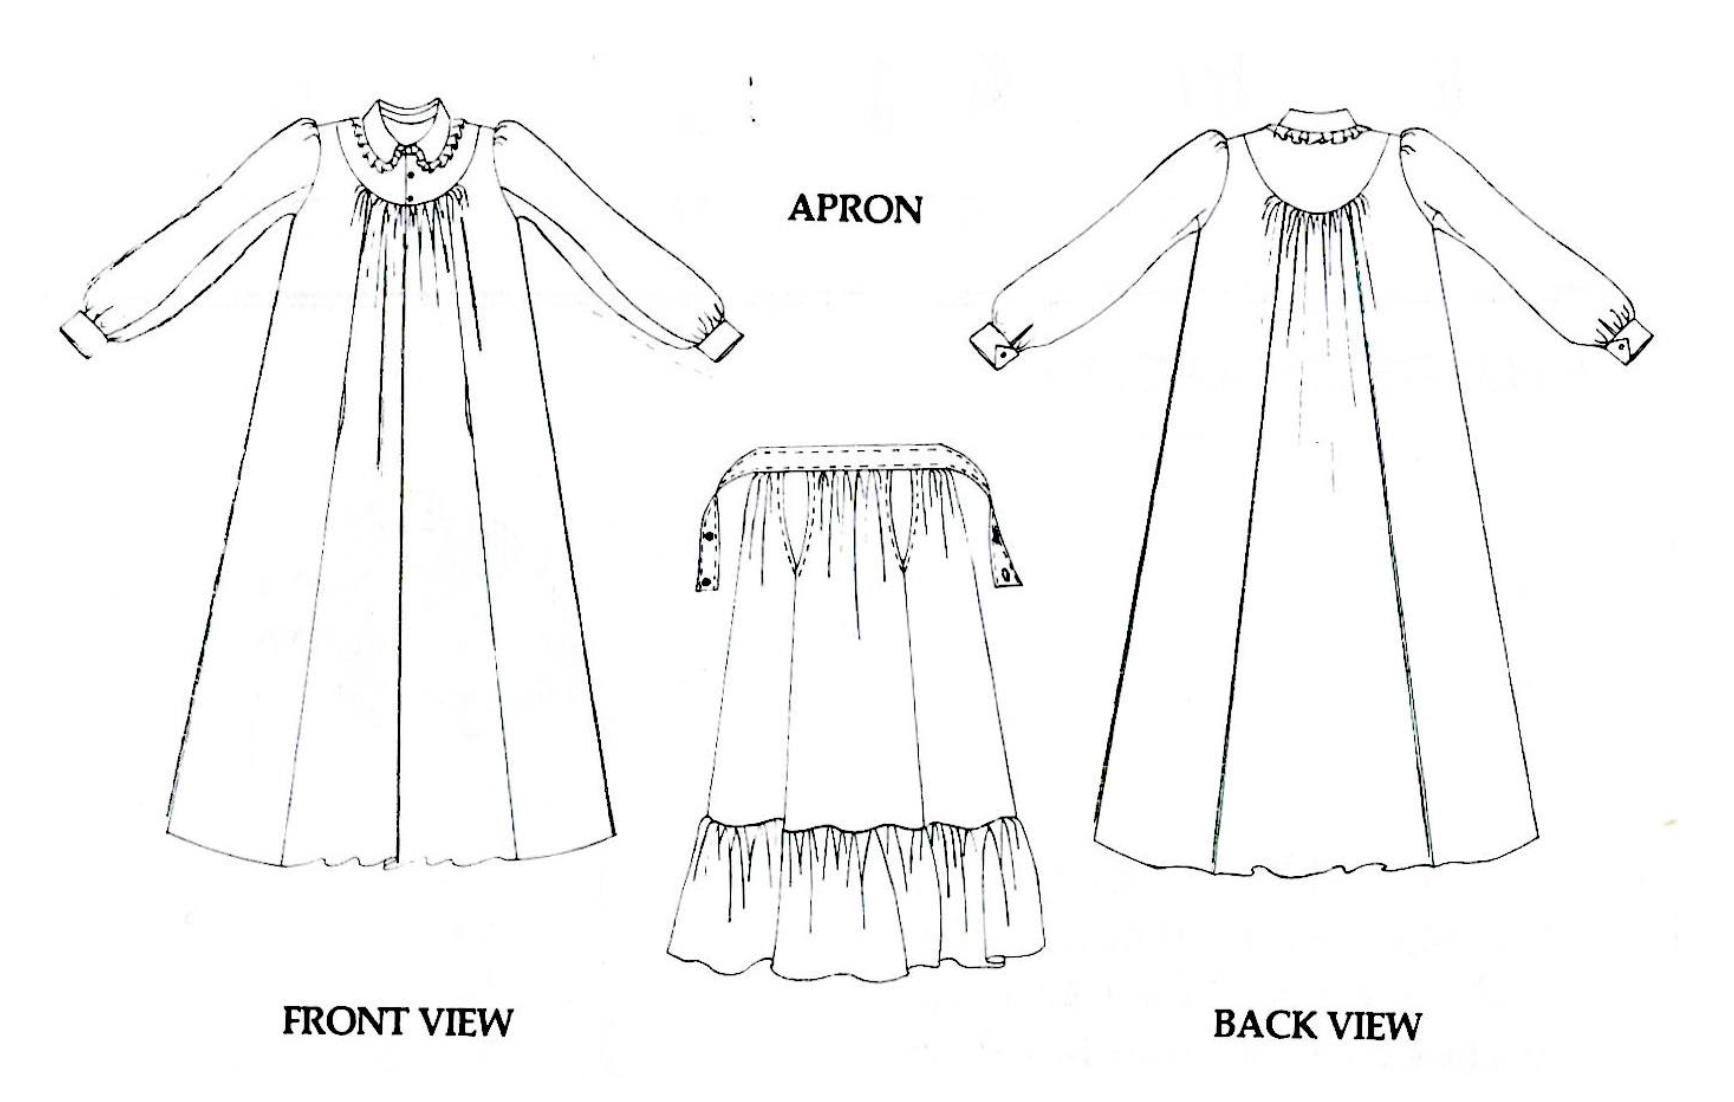 Modern Prairie Dress - Folkwear